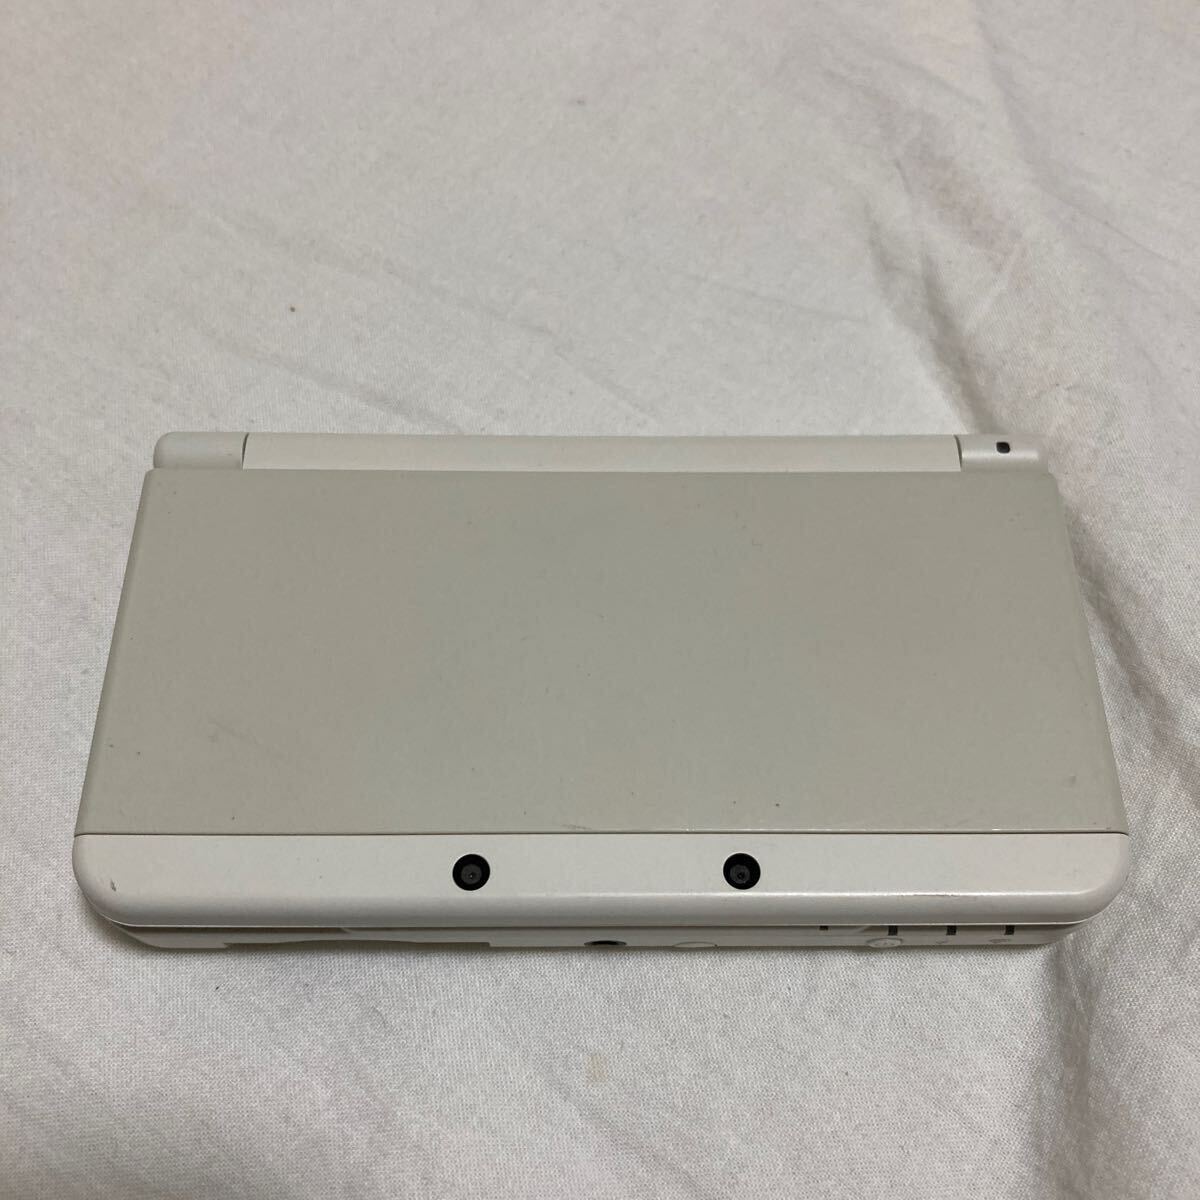 NEW Nintendo 3DS корпус белый NEW NINTENDO 3DS soft пуск * интернет подключение проверка settled 